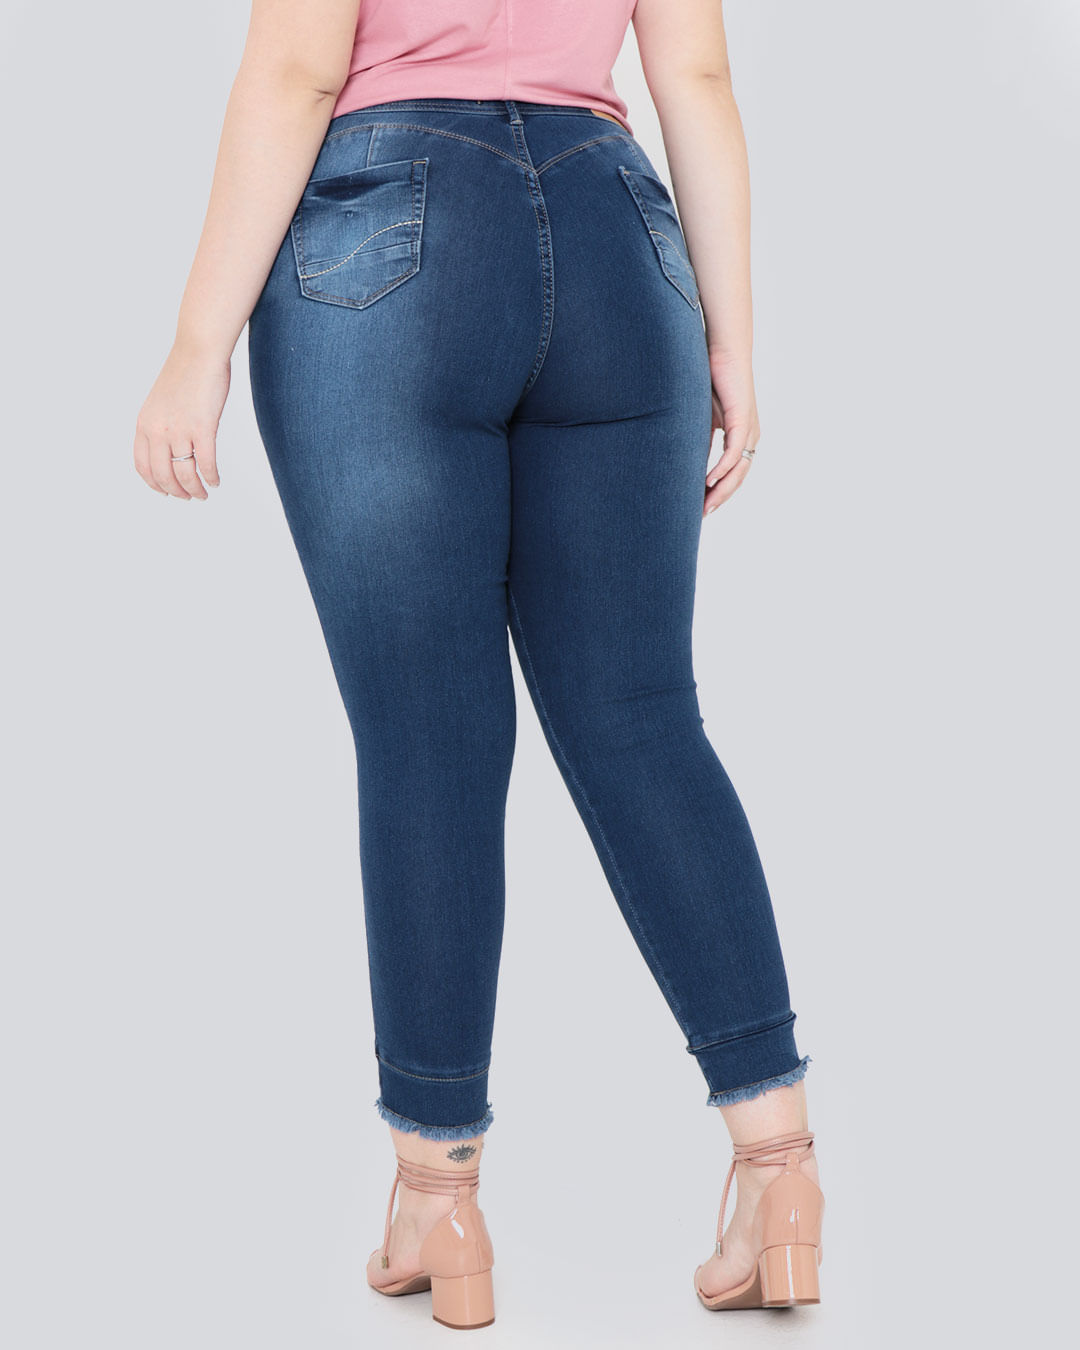 Calca-Jeans-Feminina-Plus-Size-Barra-Desfiada-Azul-Escuro